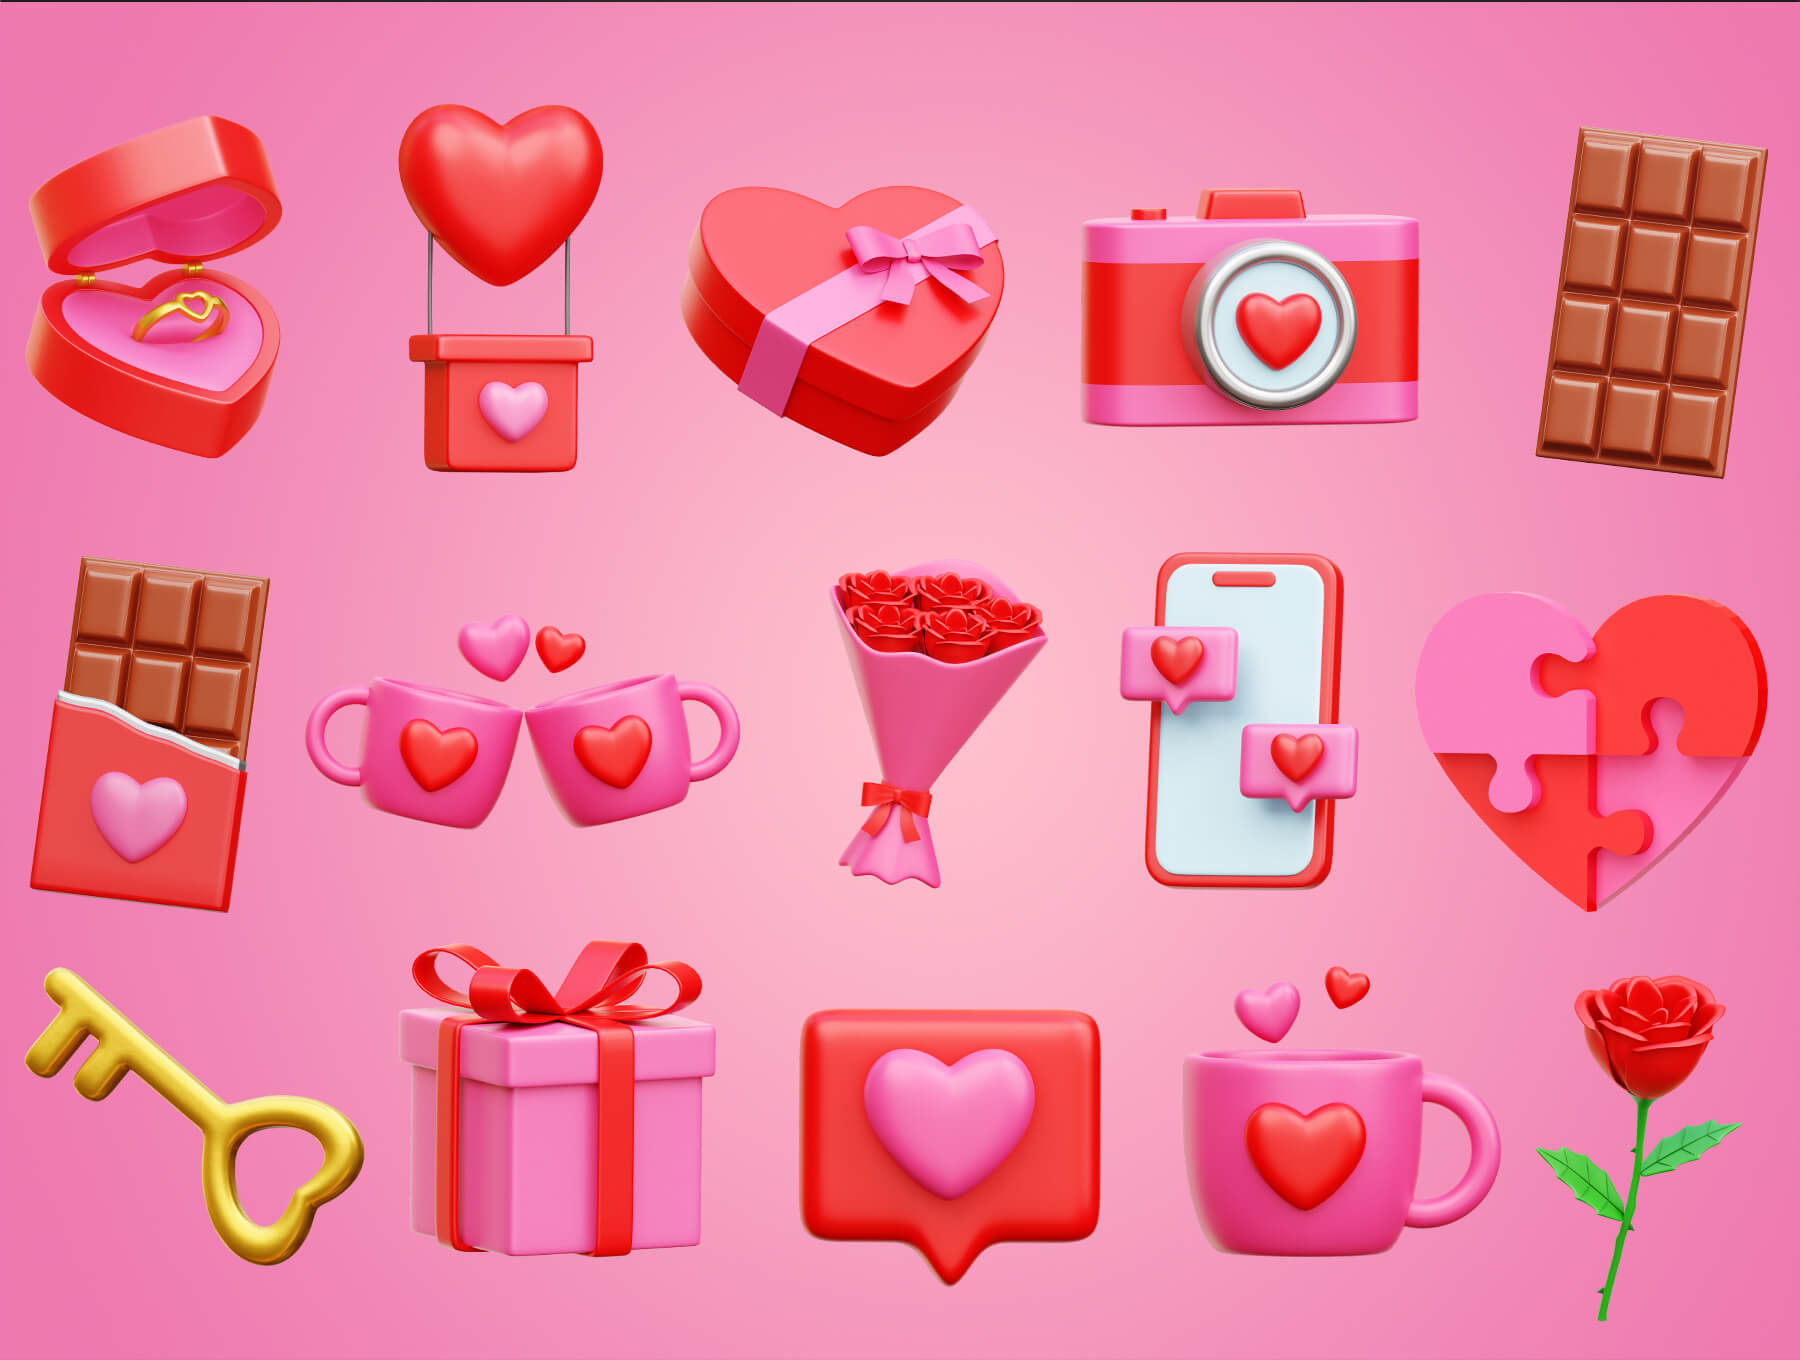 情侣社交类应用图标模板素材Valentine 3D Icon Illustrations插图4